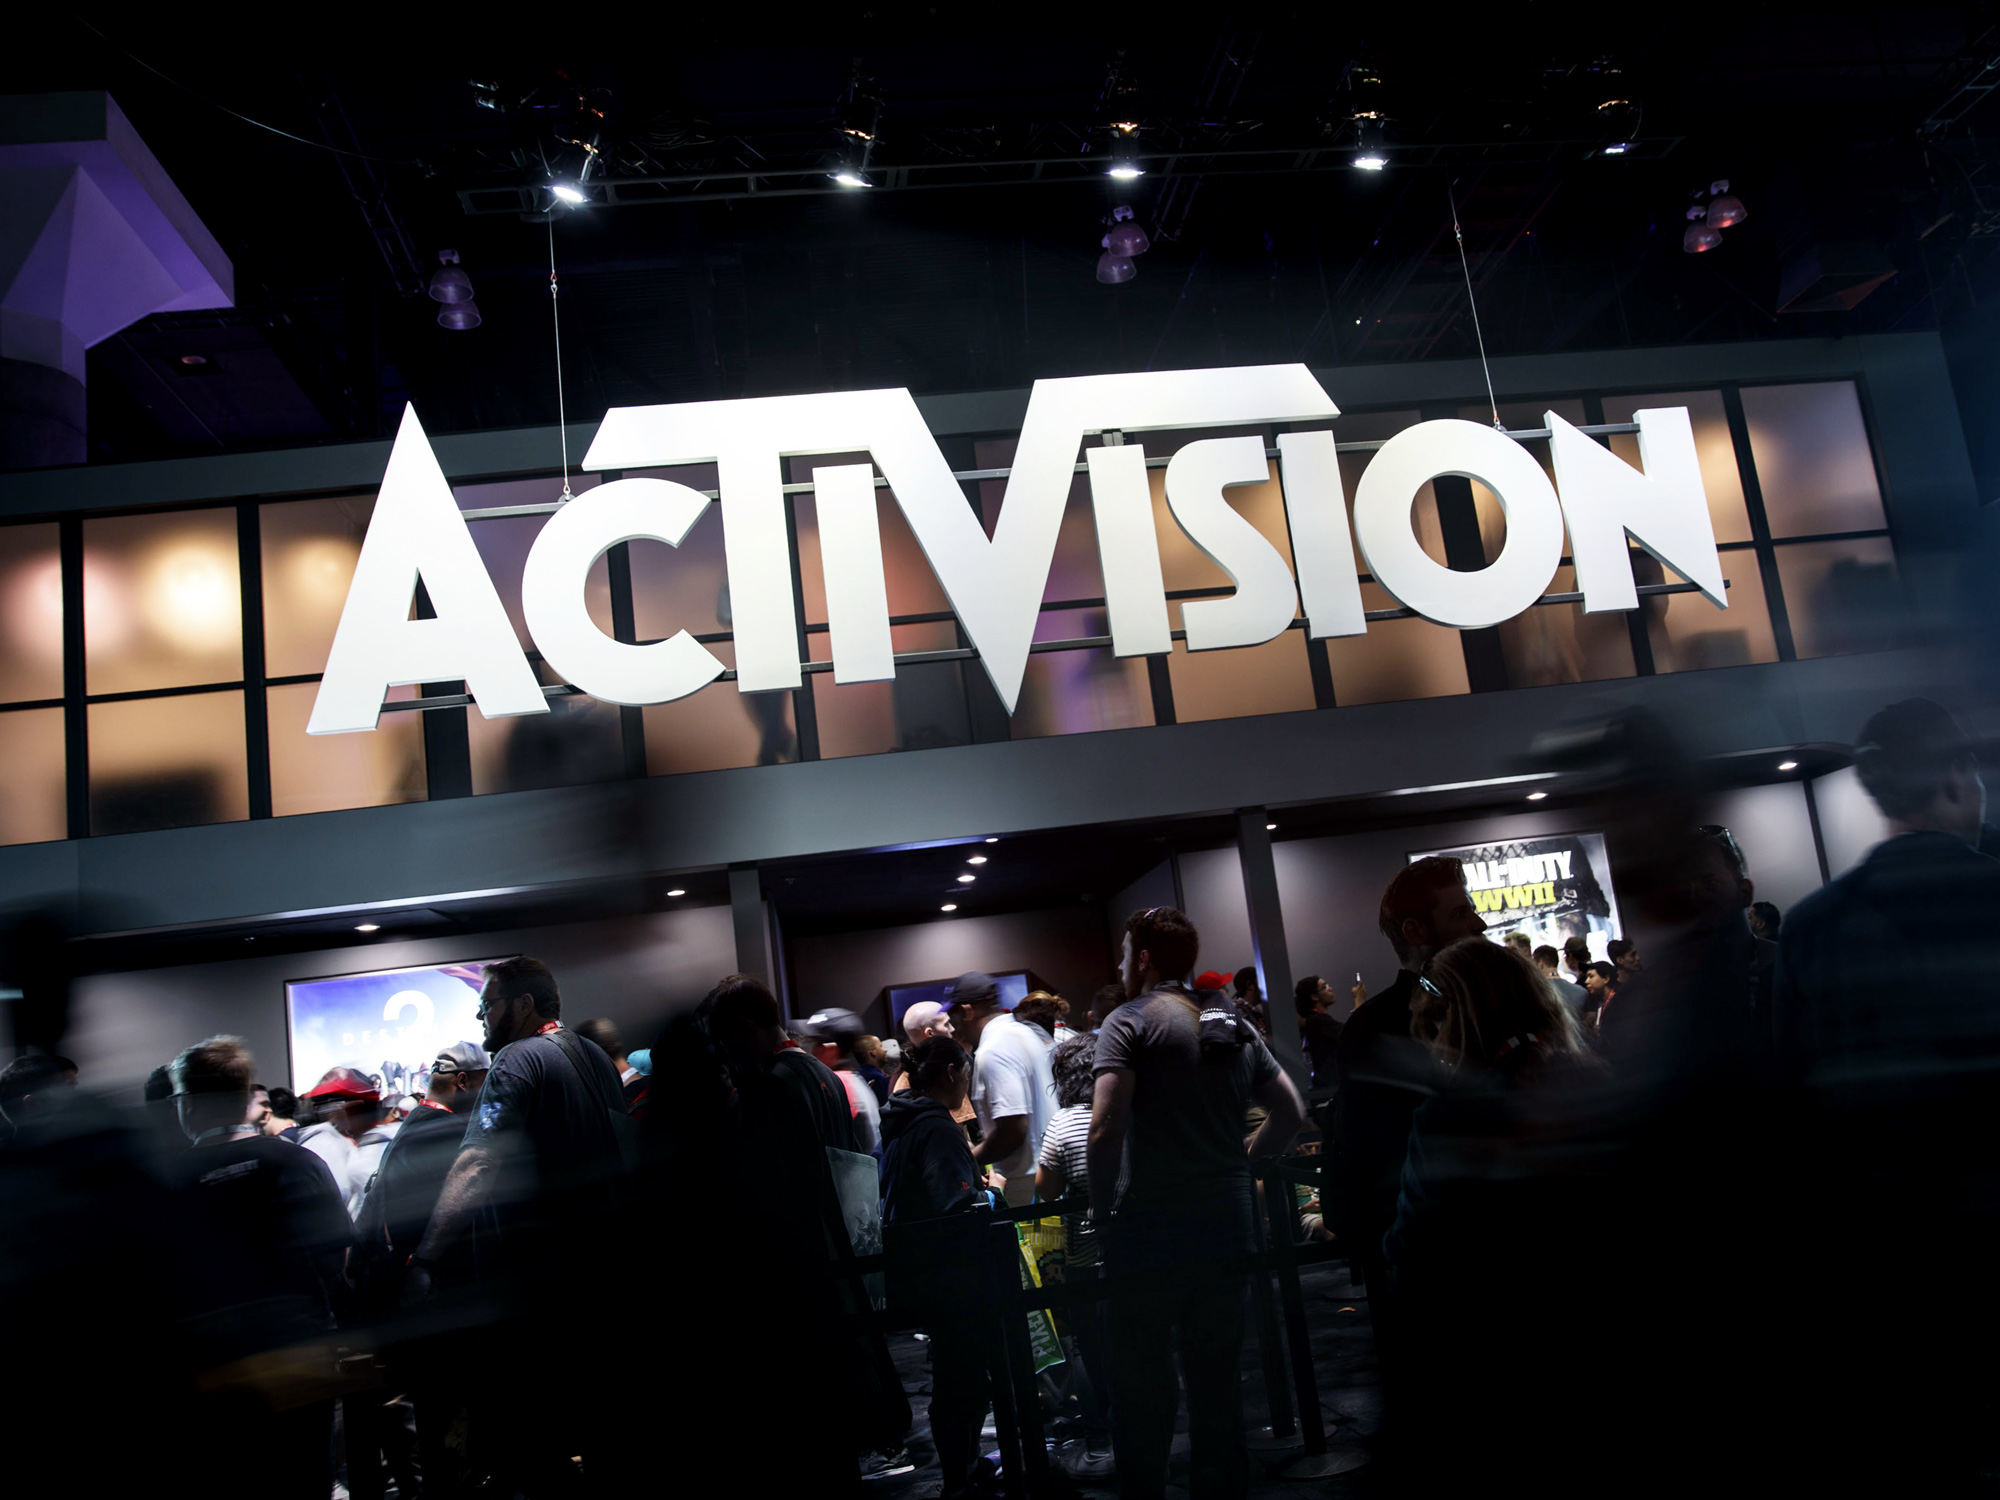 U.K. CMA Narrows Scope of Microsoft's Activision Blizzard Purchase